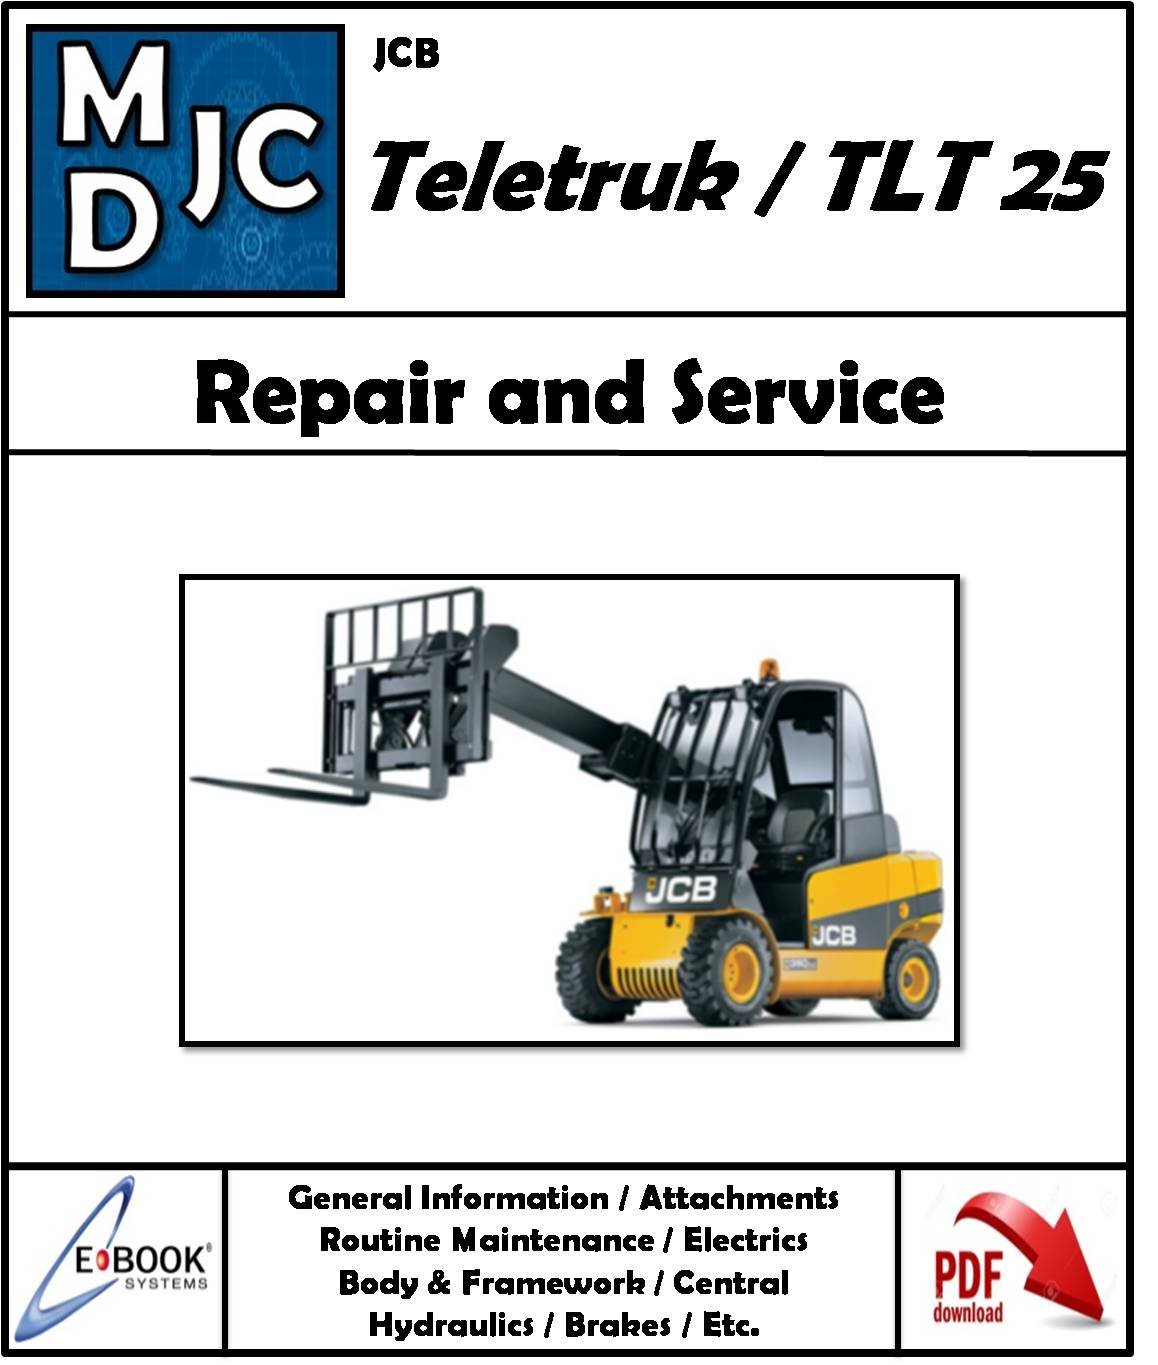 JCB Teletruk TLT 25